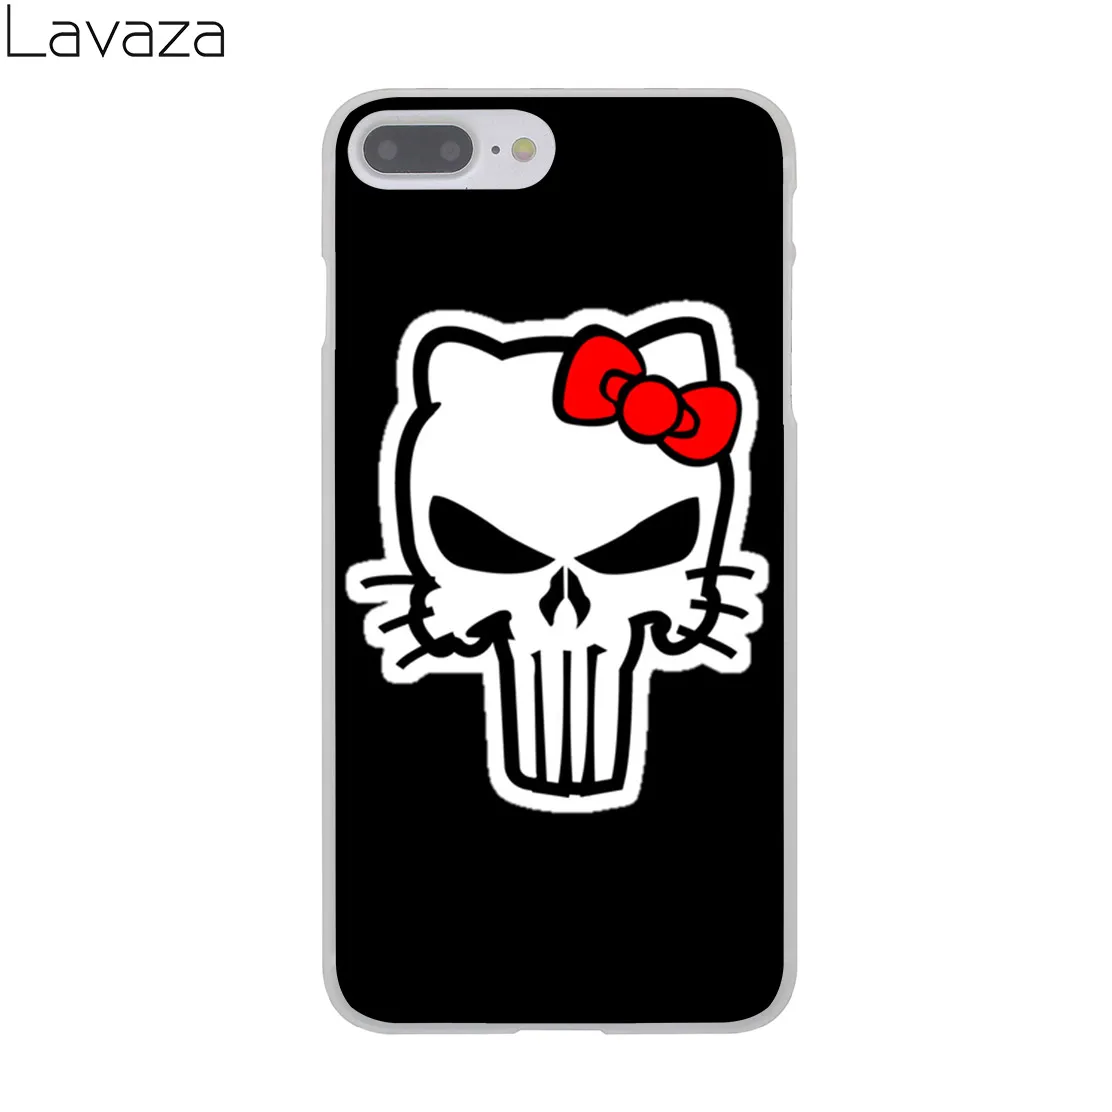 Lavaza Punisher film Pevný Kryt puzdro pre Apple iPhone 8 7 6 6 Plus 5 5S SE 5C 4 4S X 10 Coque Shell